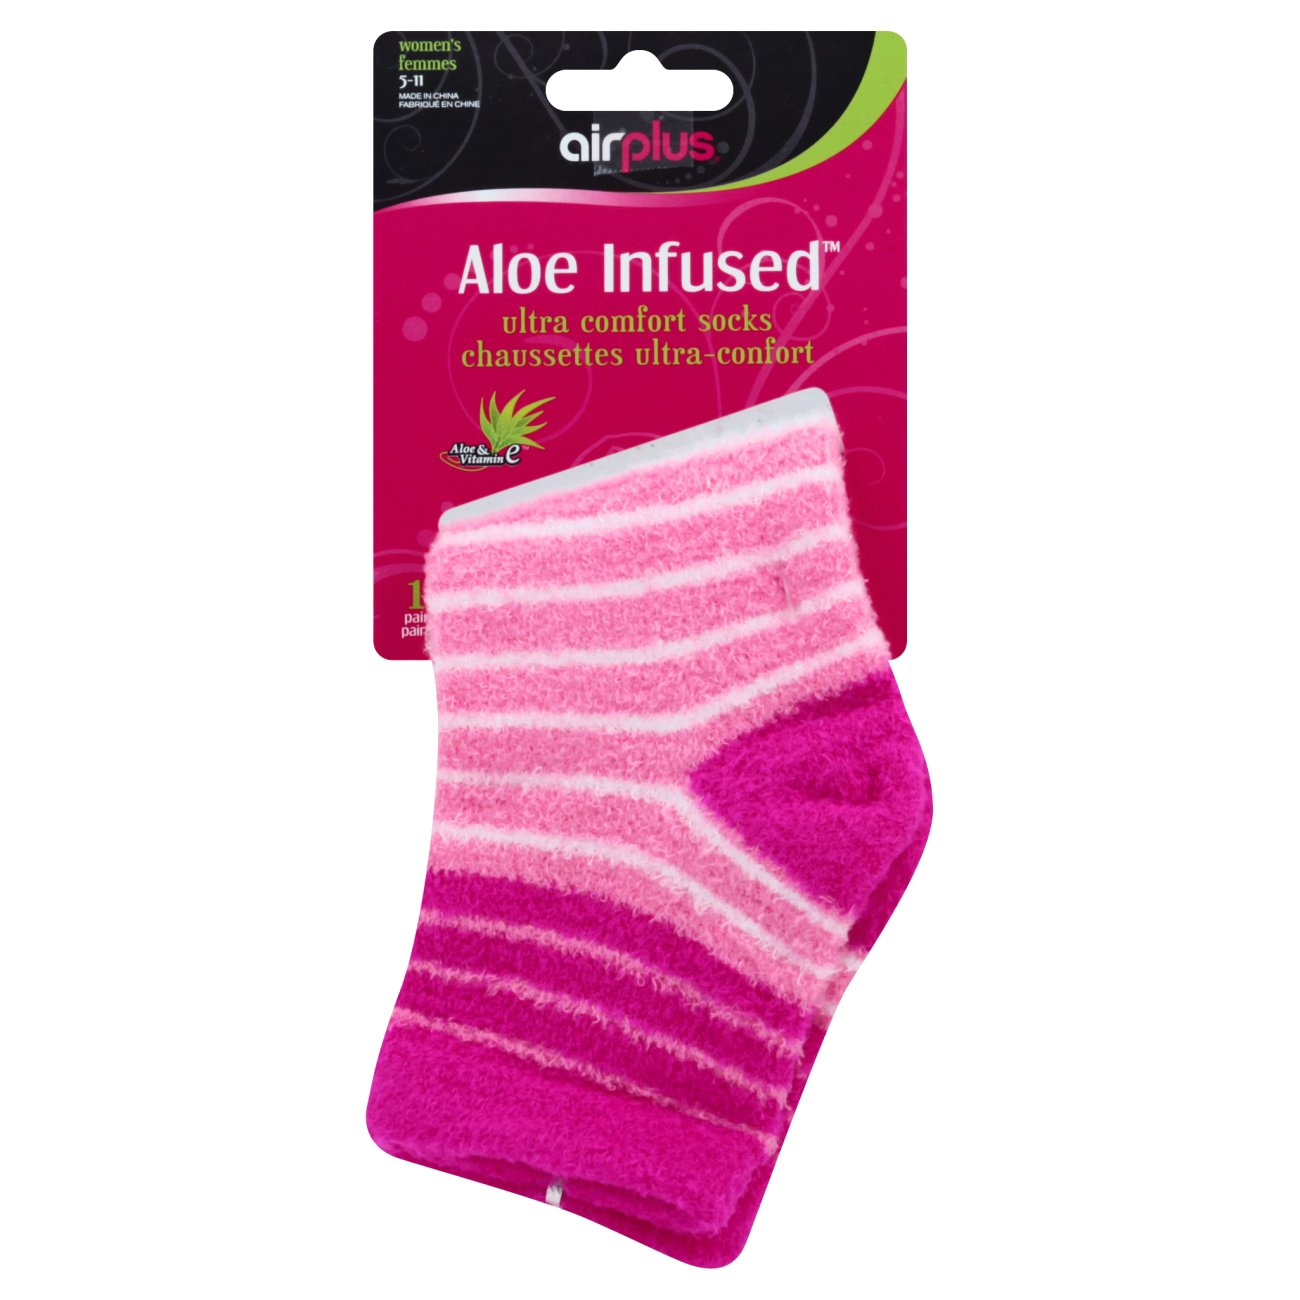 Airplus Ultra Moisturizing Aloe Infused Women's Socks, Assorted